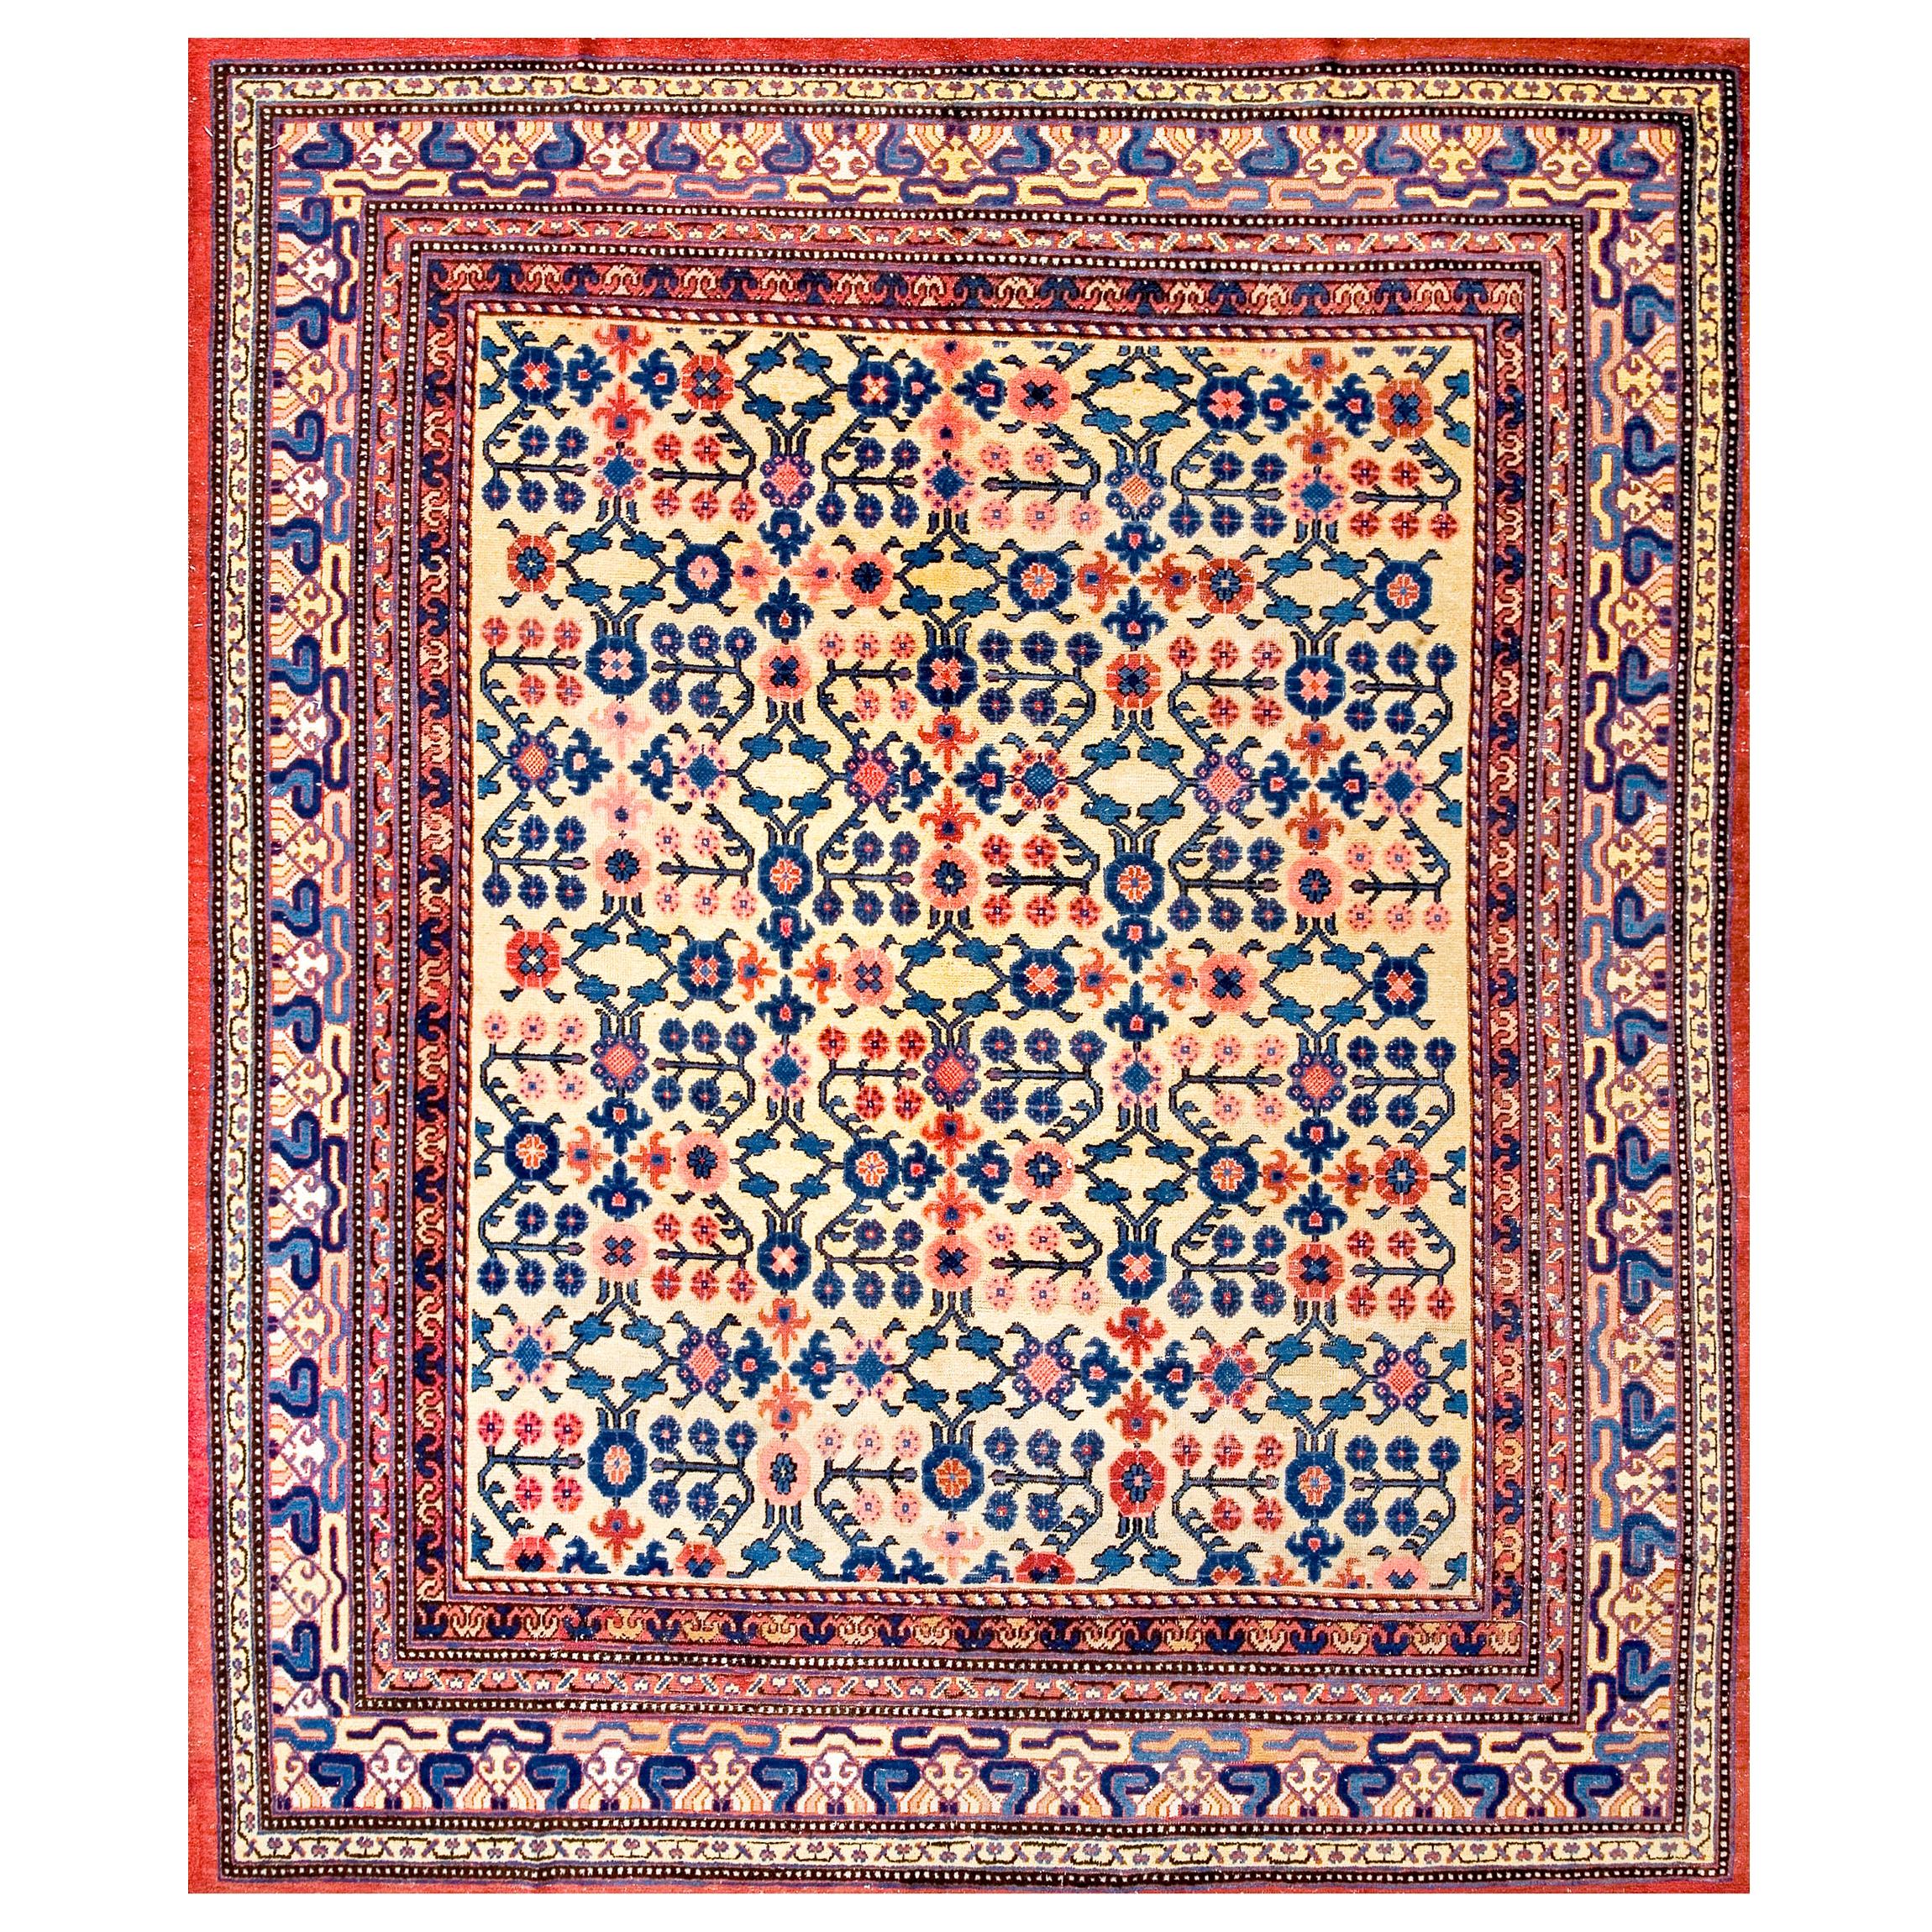 Mid 19th Century Central Asian Yarkand Carpet ( 8'3" x 9'8" - 252 x 295 )